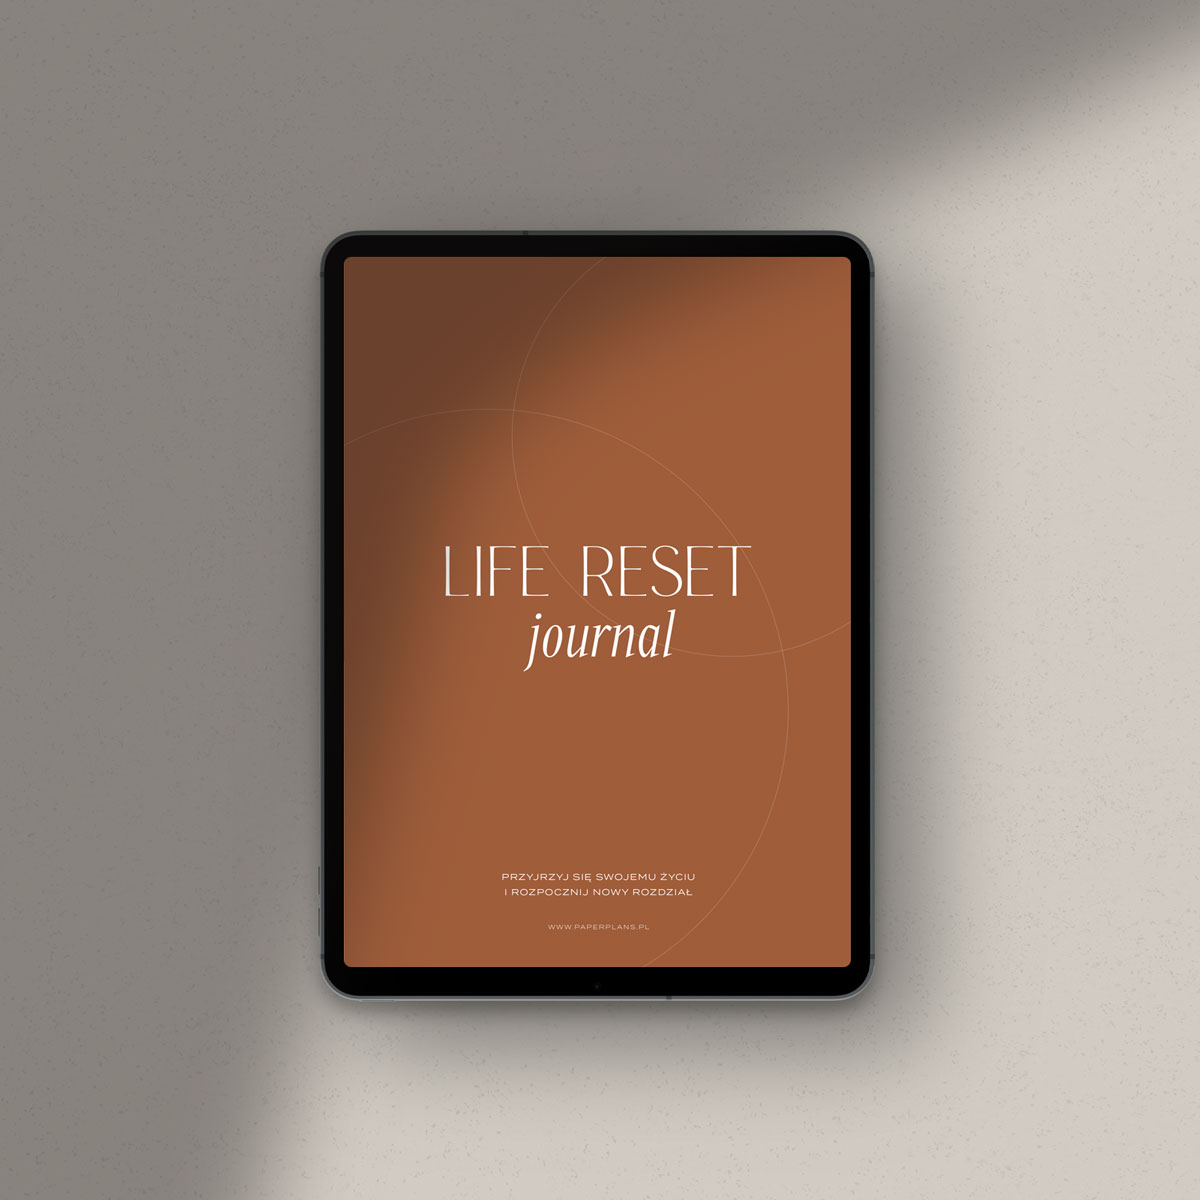 Life Reset Journal - Workbook